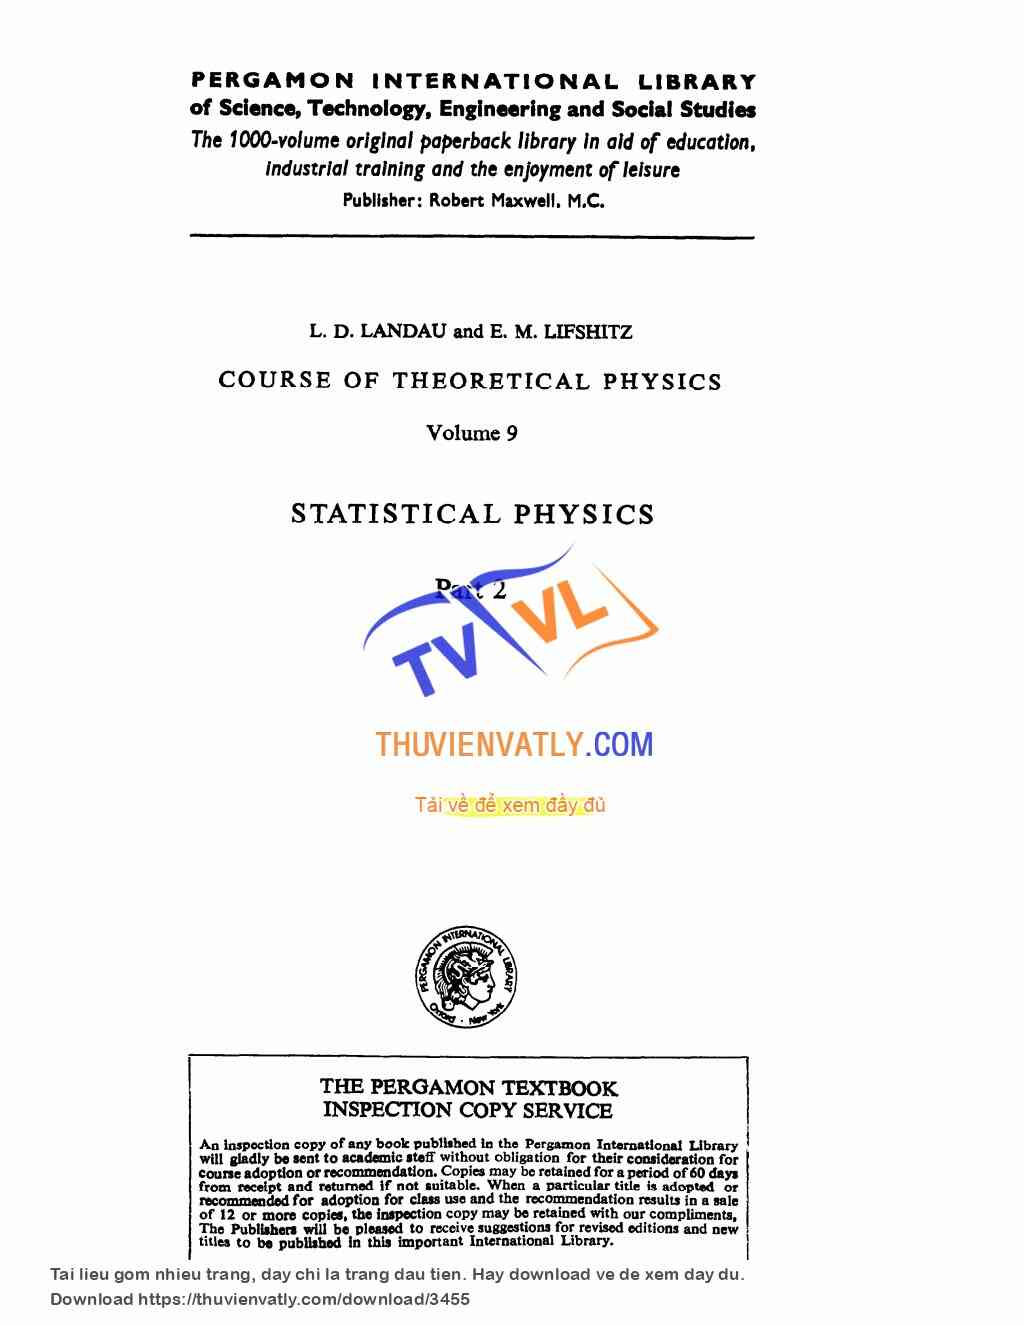 Landau L.D., Lifshitz E.M. Course of Theoretical Physics. Vol. 09. Statistical Physics- Part 2